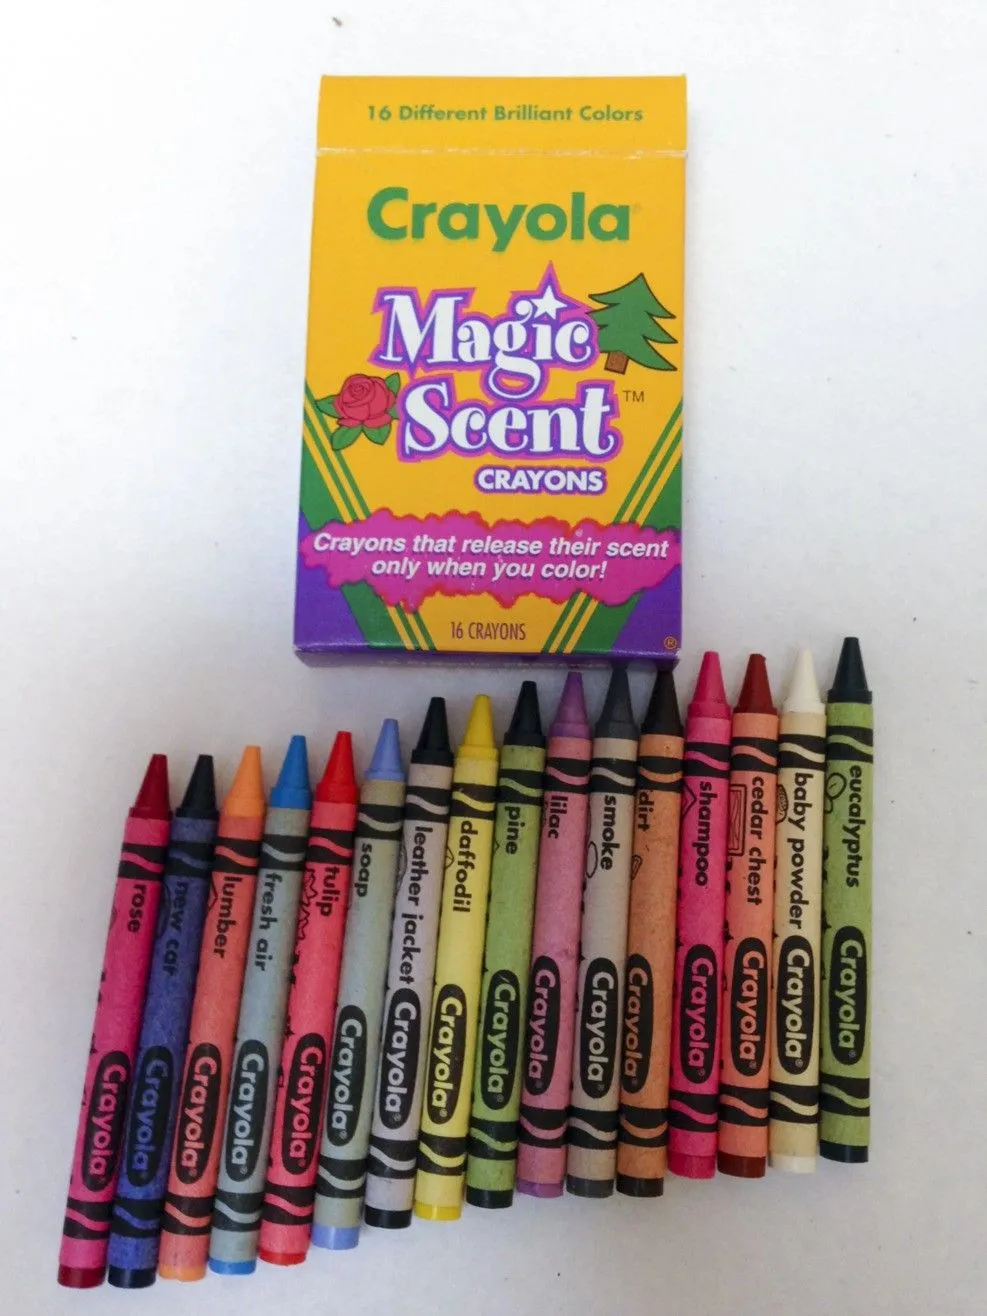 Feeling like the coolest kid in class when you had Crayola instead of regular pencils.jpg?format=webp